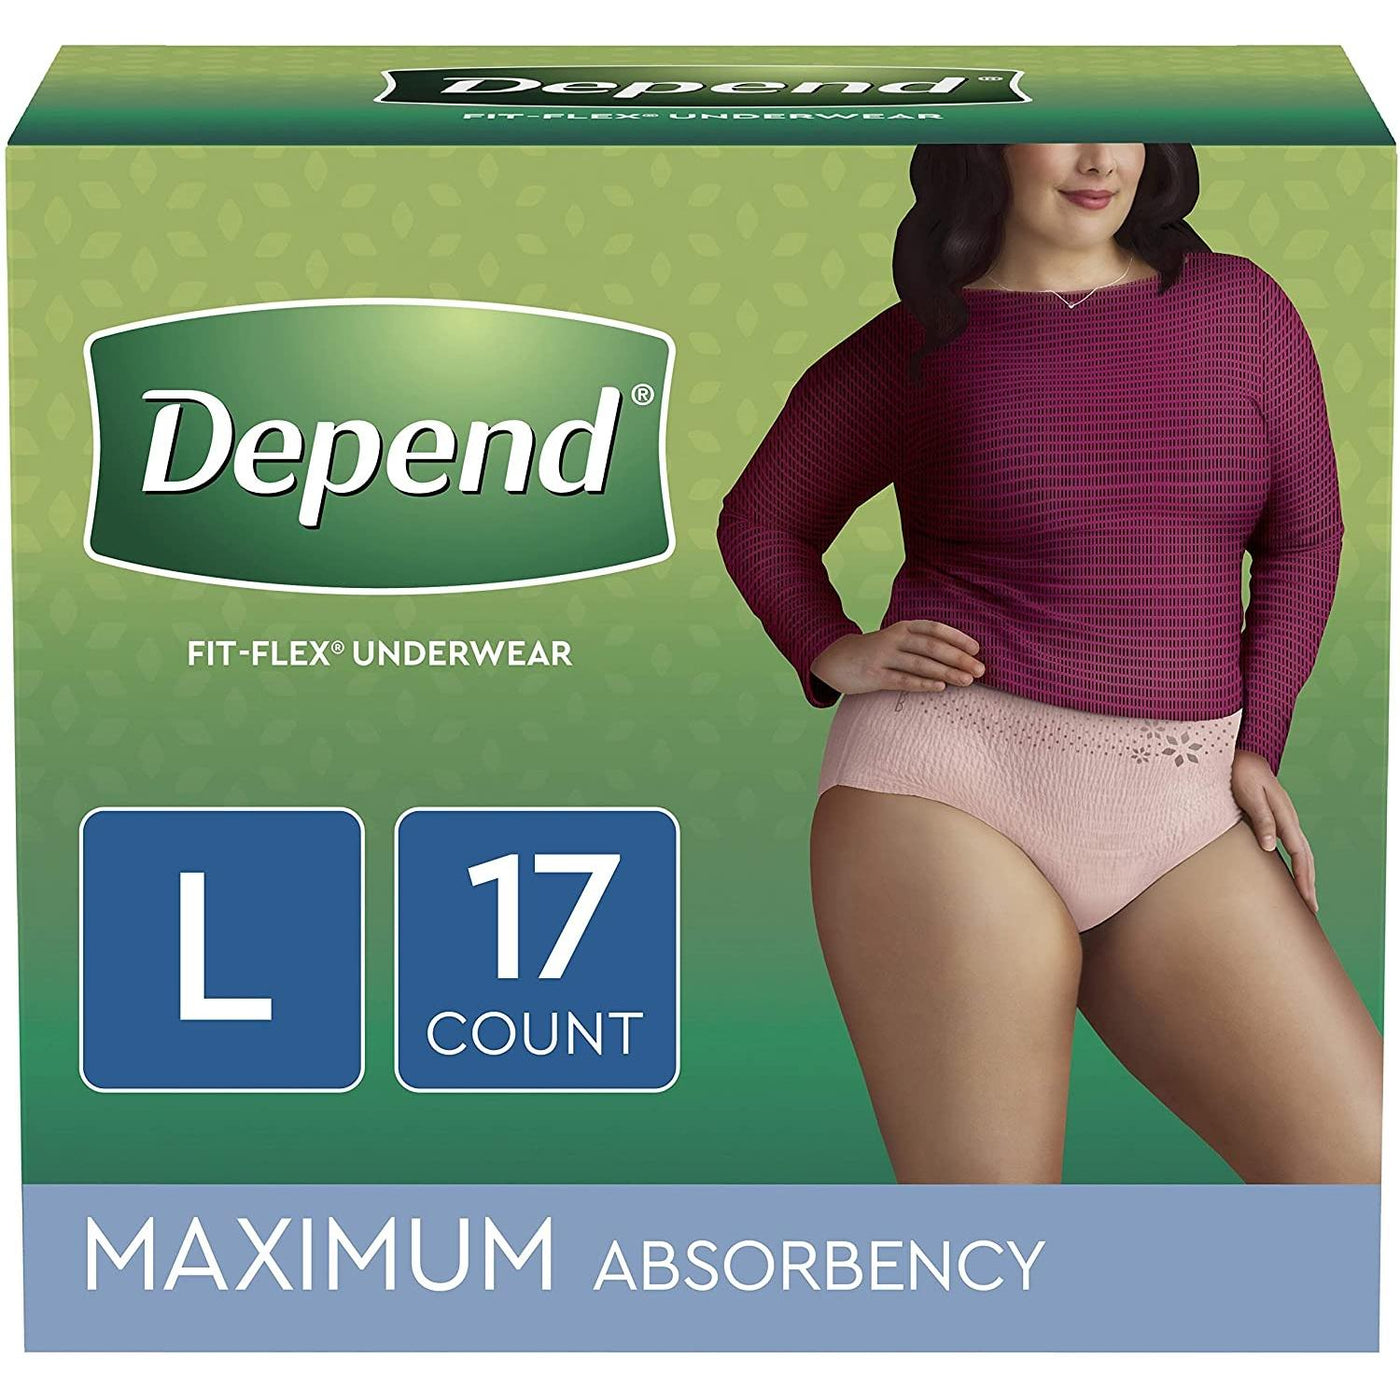 basics Womens Protective Underwear Size Medium Fits 31-37 Waist